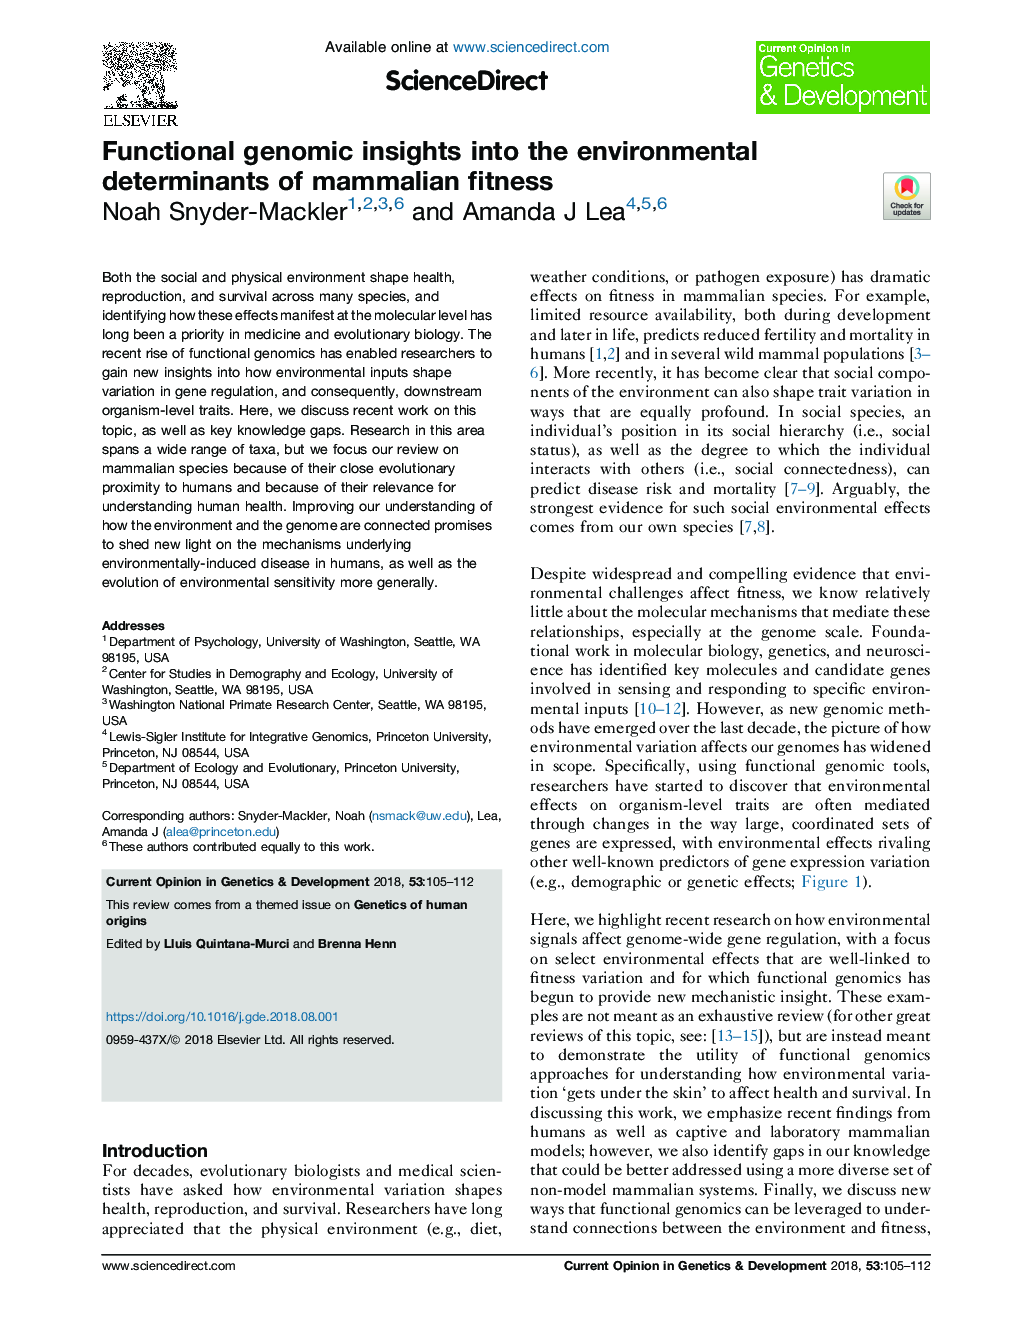 Functional genomic insights into the environmental determinants of mammalian fitness